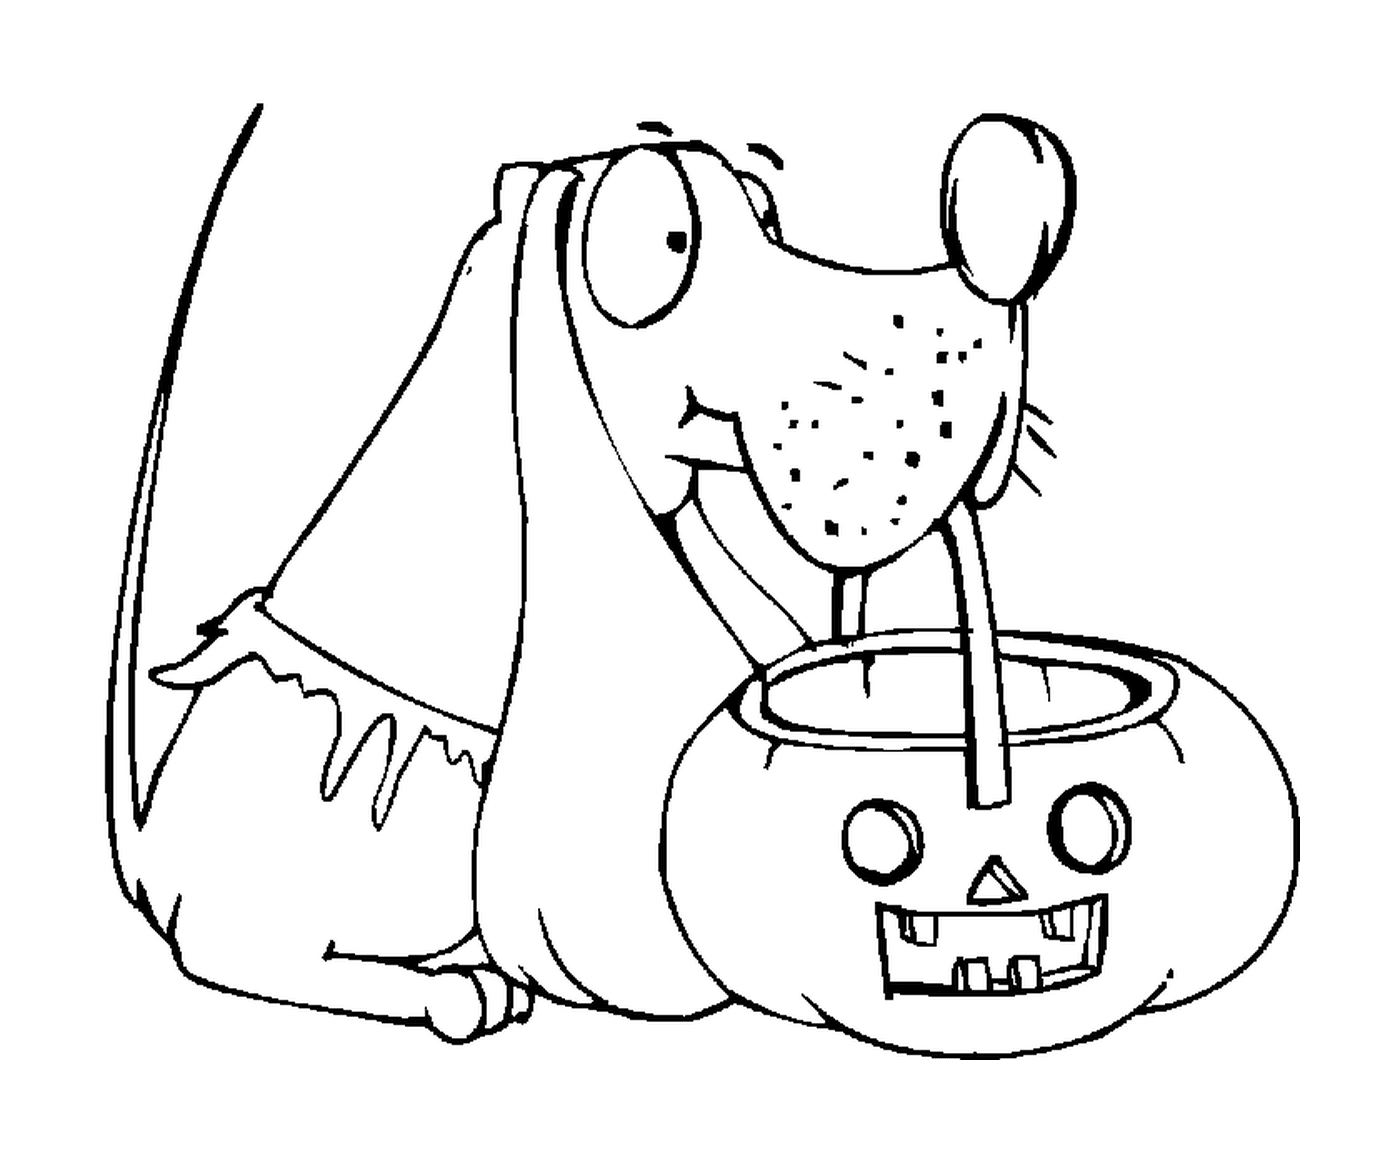  Собака с тыковкой на Хэллоуин 